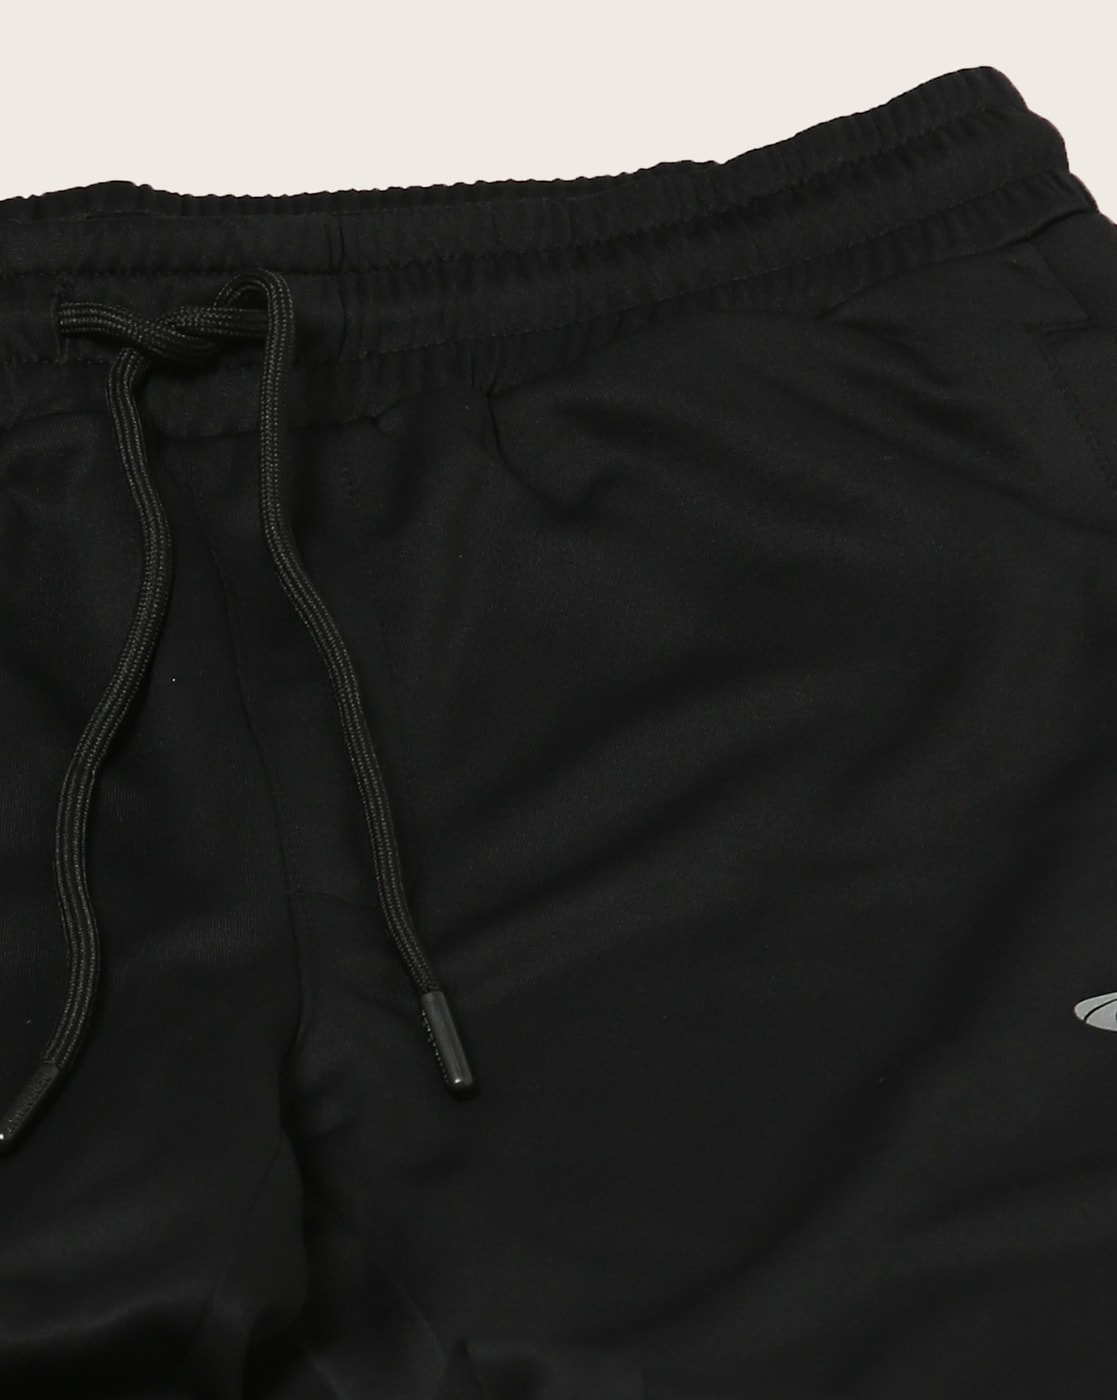 Nike therma-fit track pants. | Black nikes, Nike, Clothes design